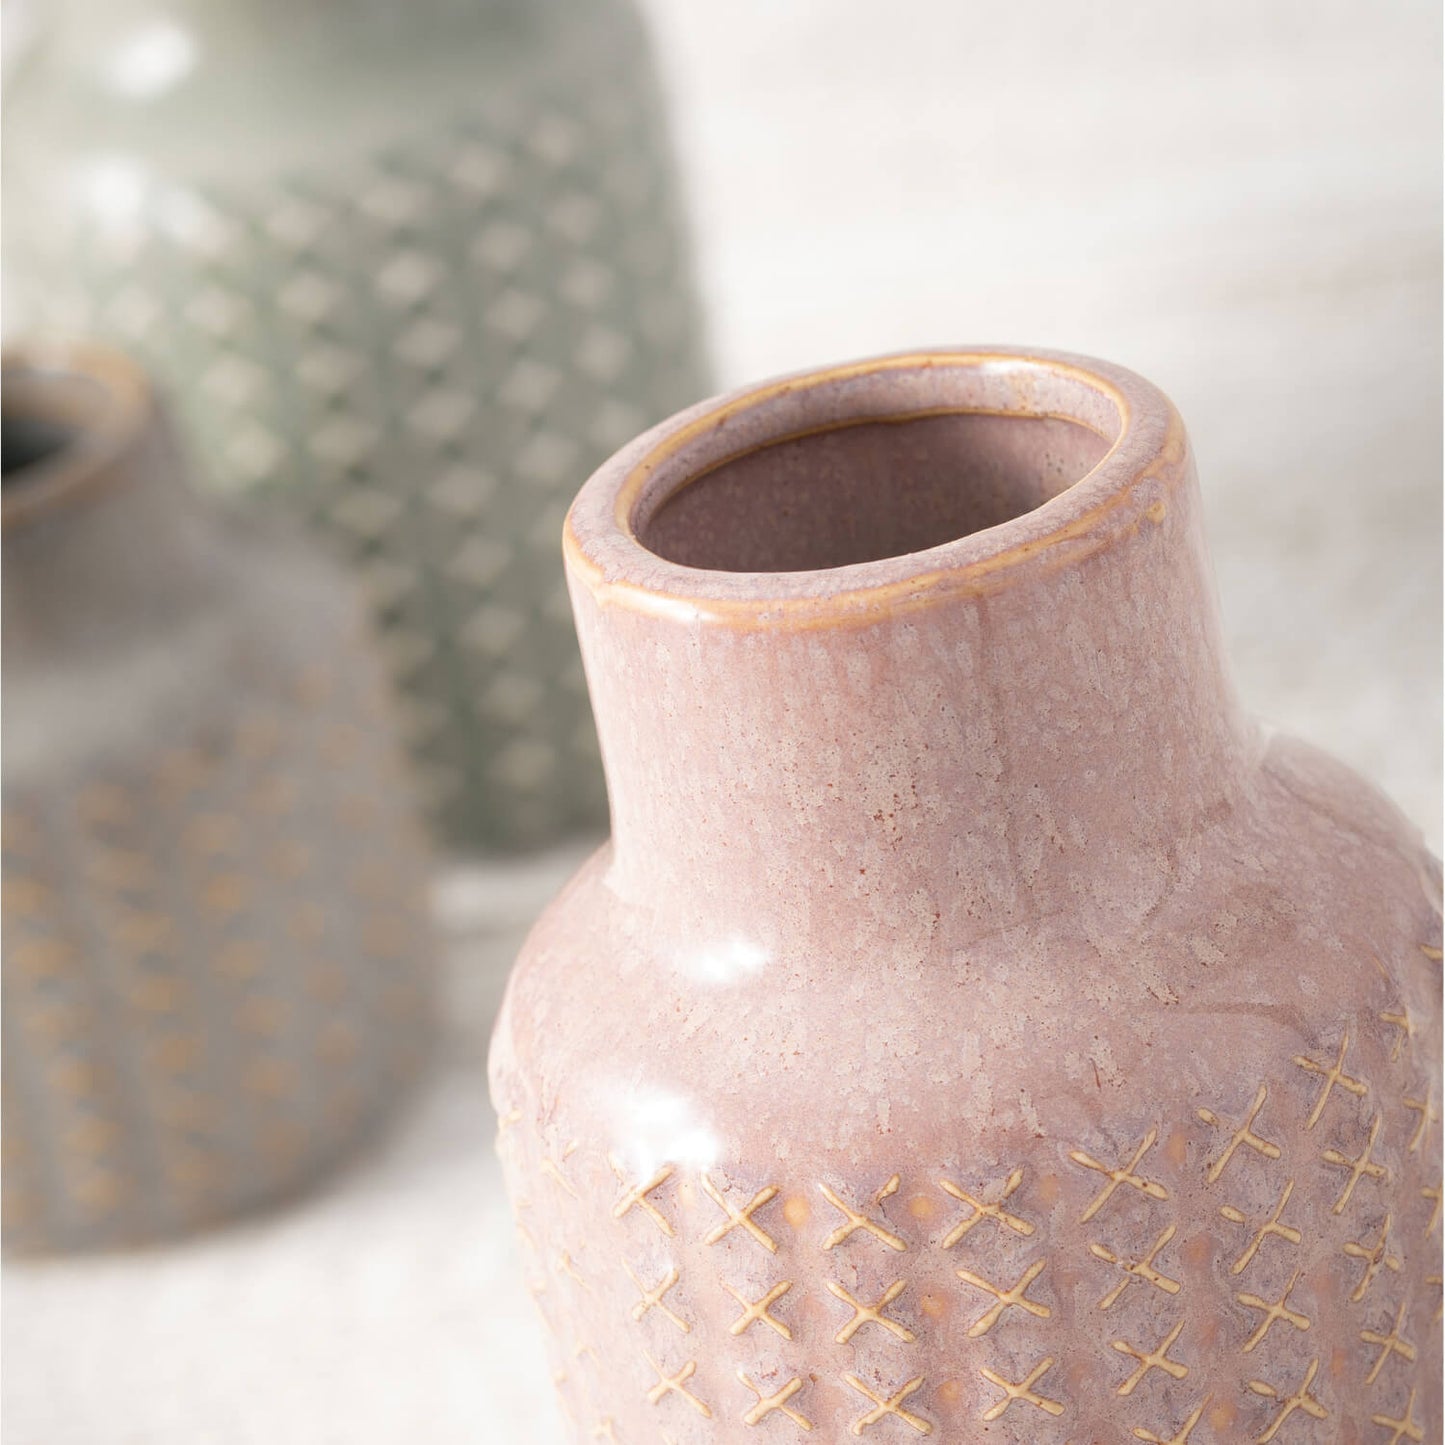 Crosshatch Pattern Vases